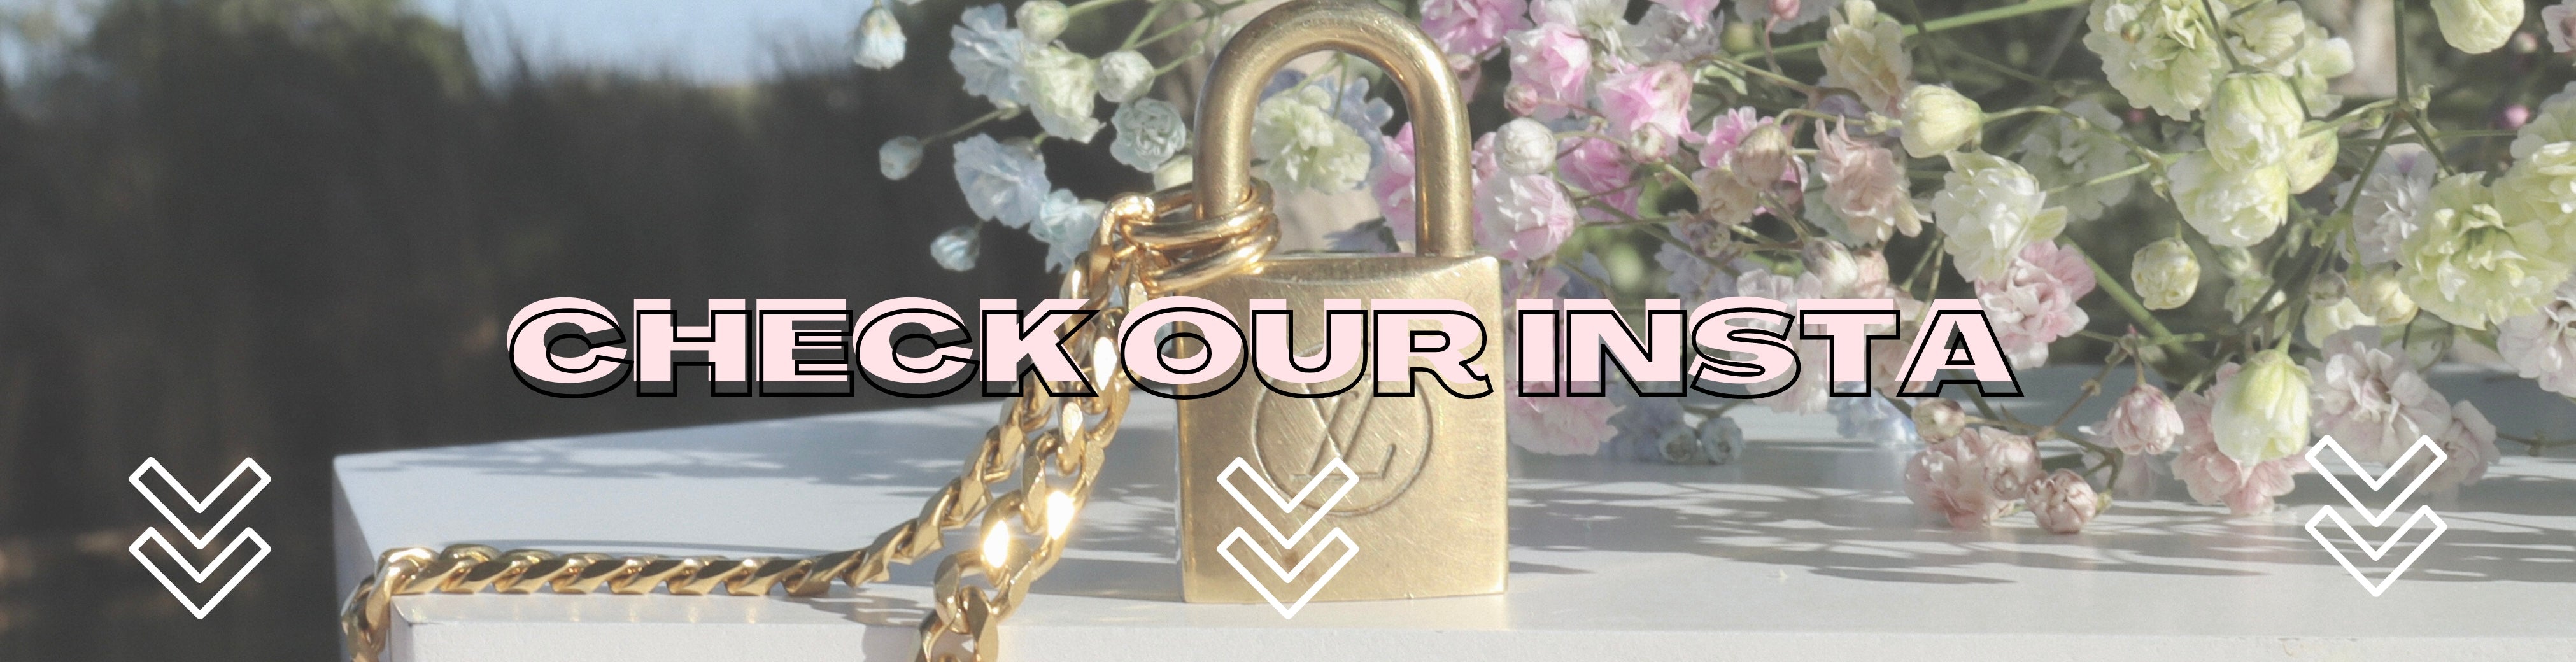 Repurposed LV Lock Necklace – Moonstock Jewelry